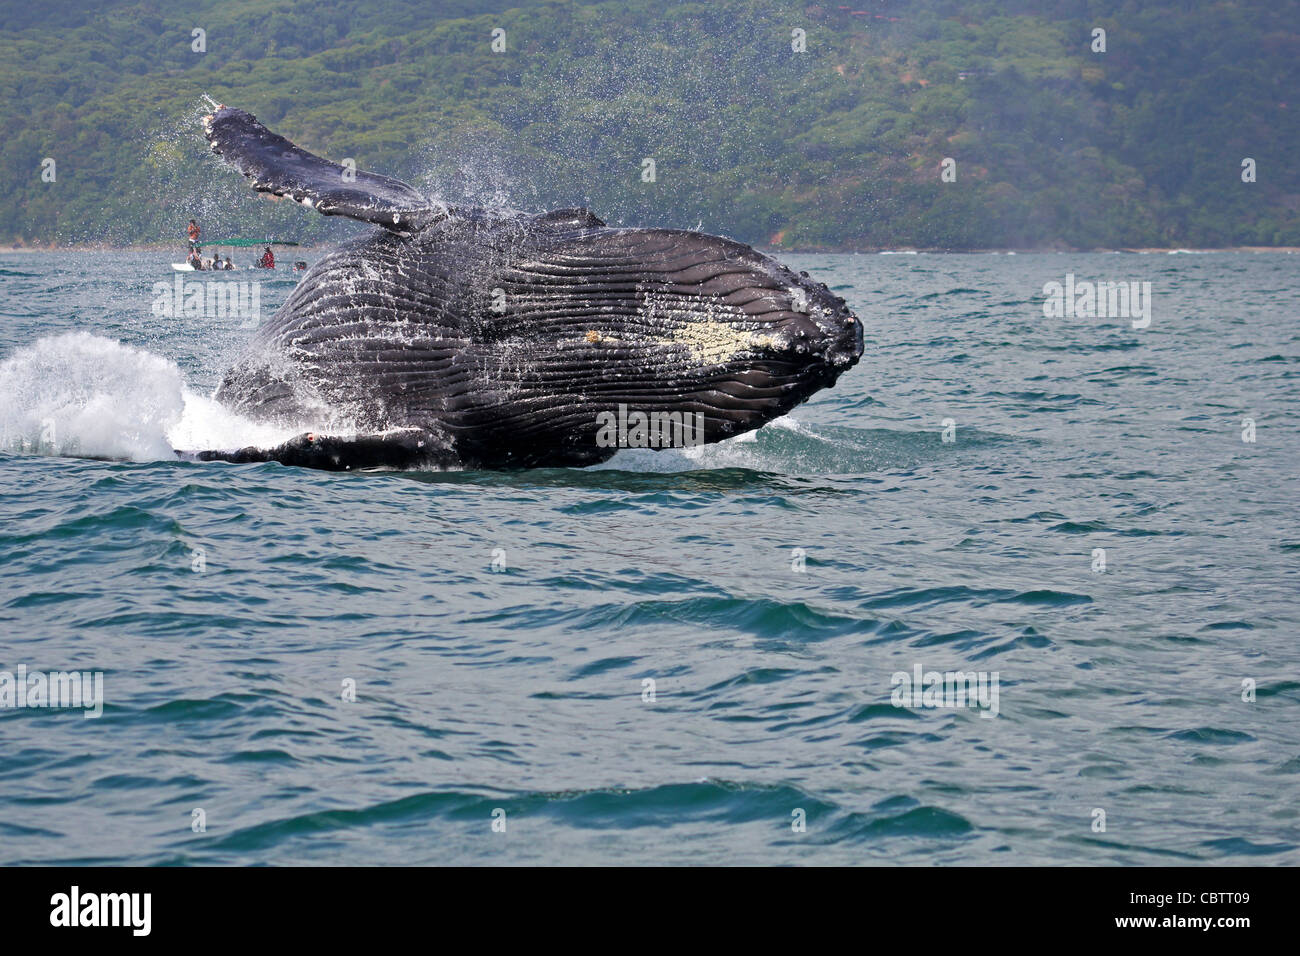 Humpback Whale breaching en parc national Marino Ballena, Costa Rica Banque D'Images